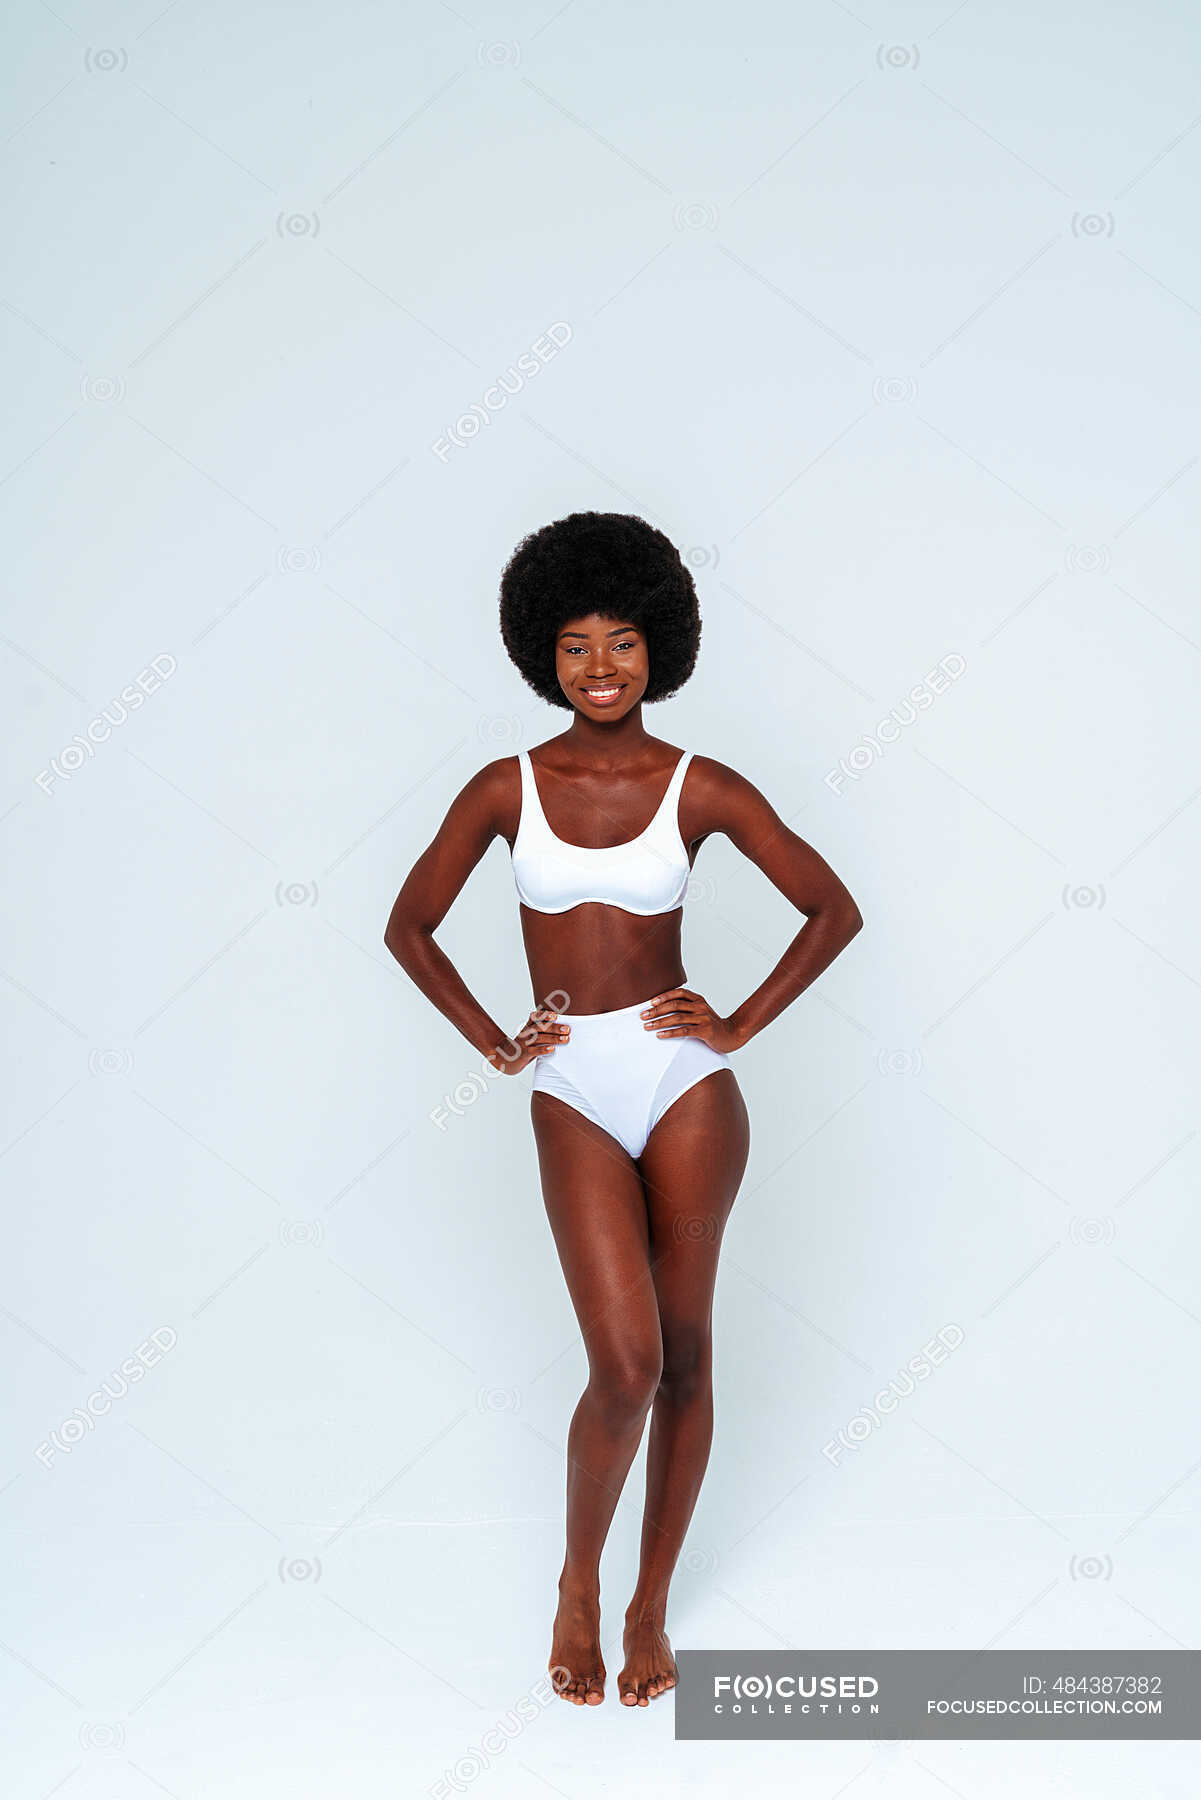 Skinny female model wearing bikini standing against white background —  individuality, hair - Stock Photo | #484387382